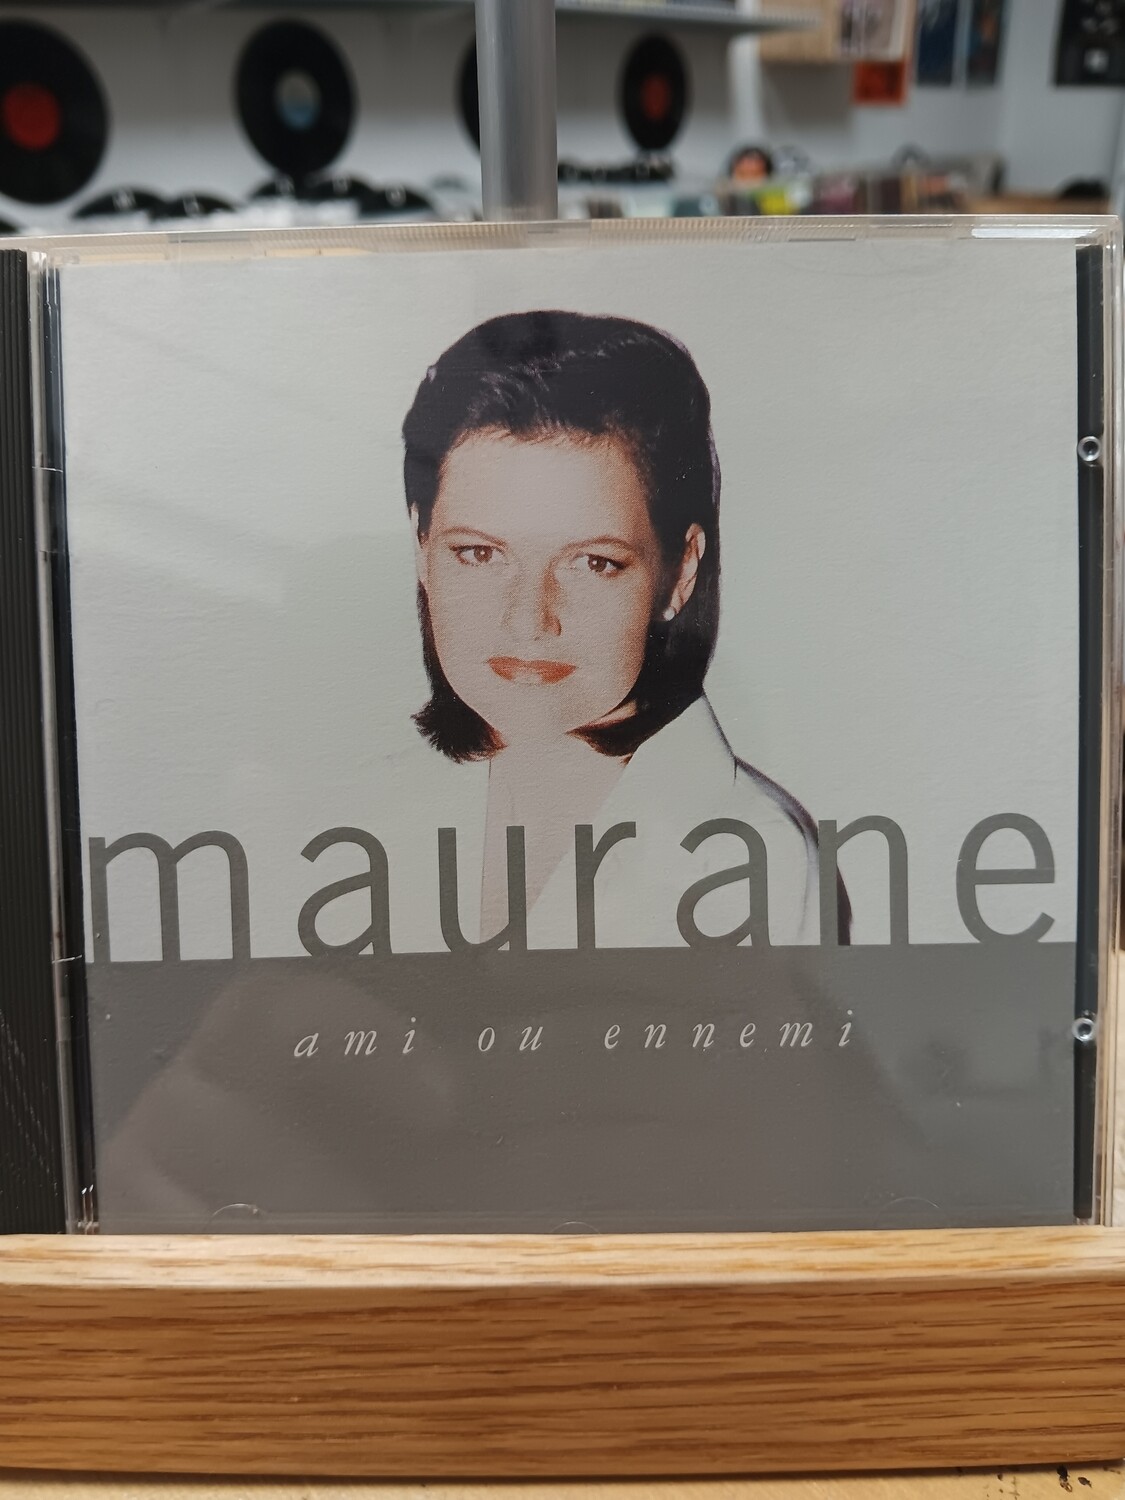 Maurane - Ami ou ennemi (CD)